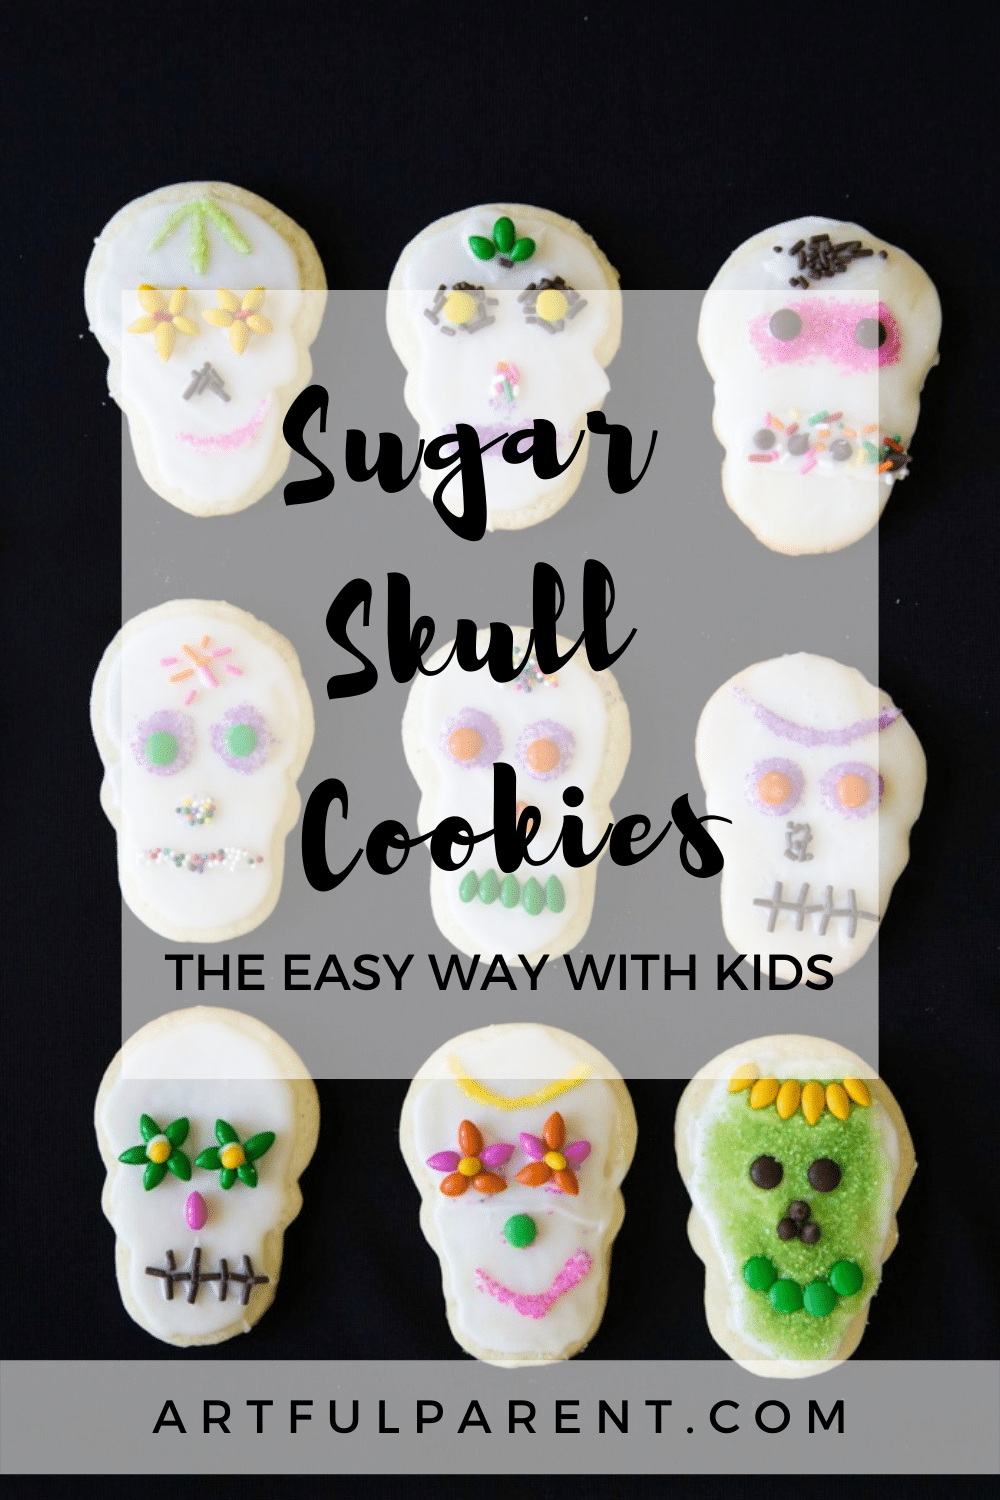 How to Make Sugar Skull Cookies